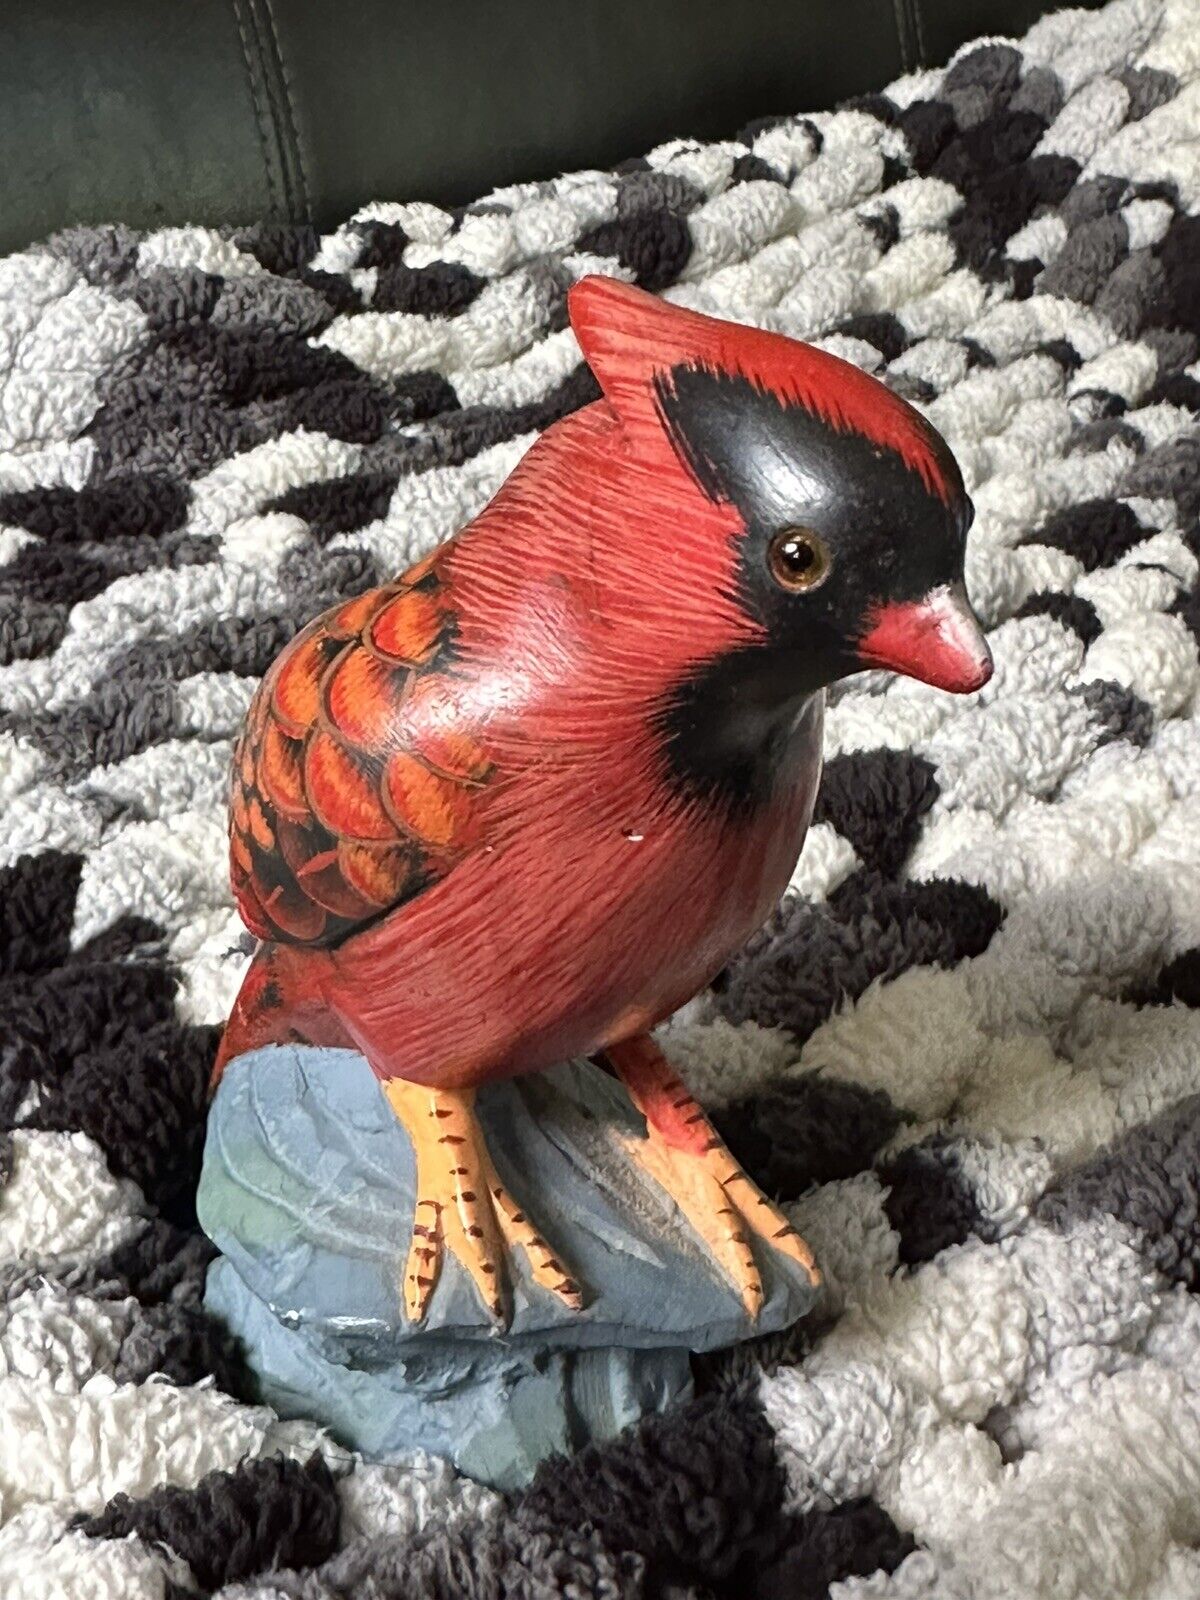 Republic of China Hand Stone Cardinal Bird Hand Painted Sculpture Figurine.